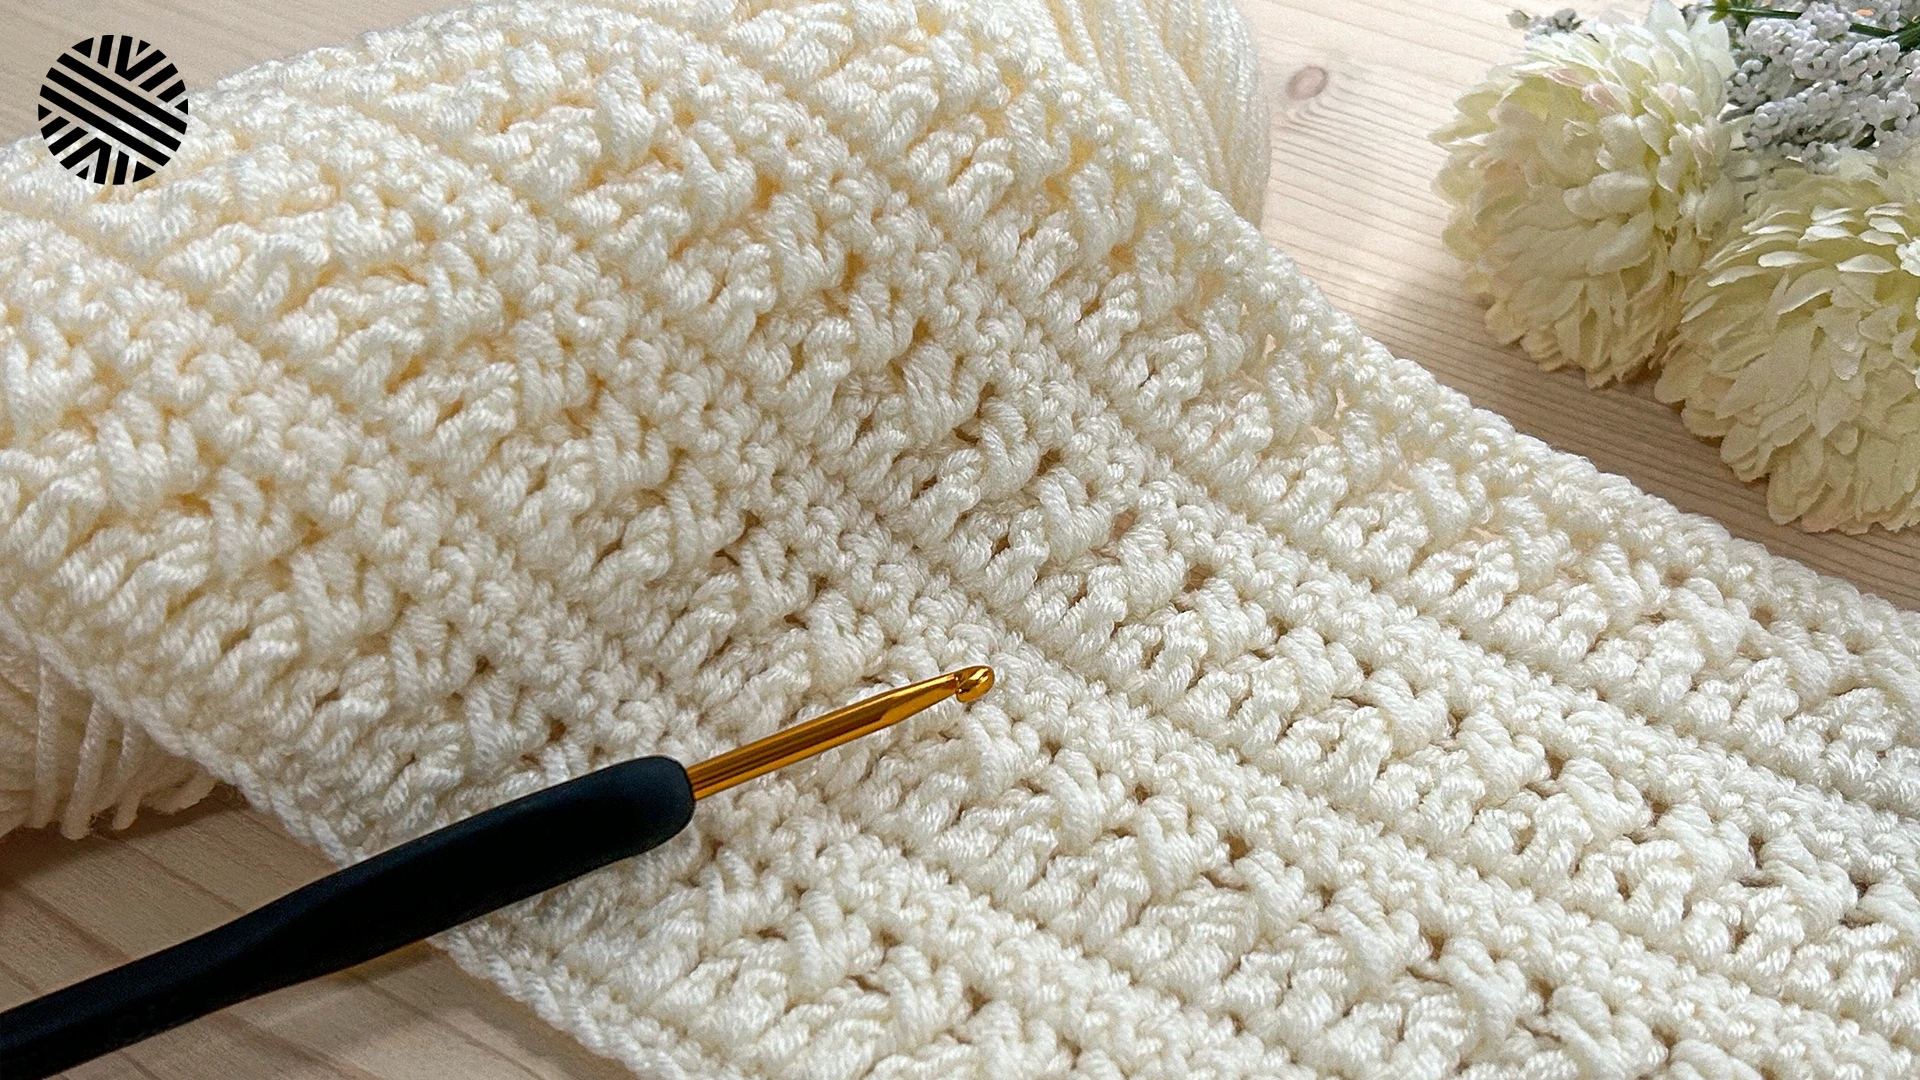 The Fastest Crochet Stitches - Easy Crochet Patterns